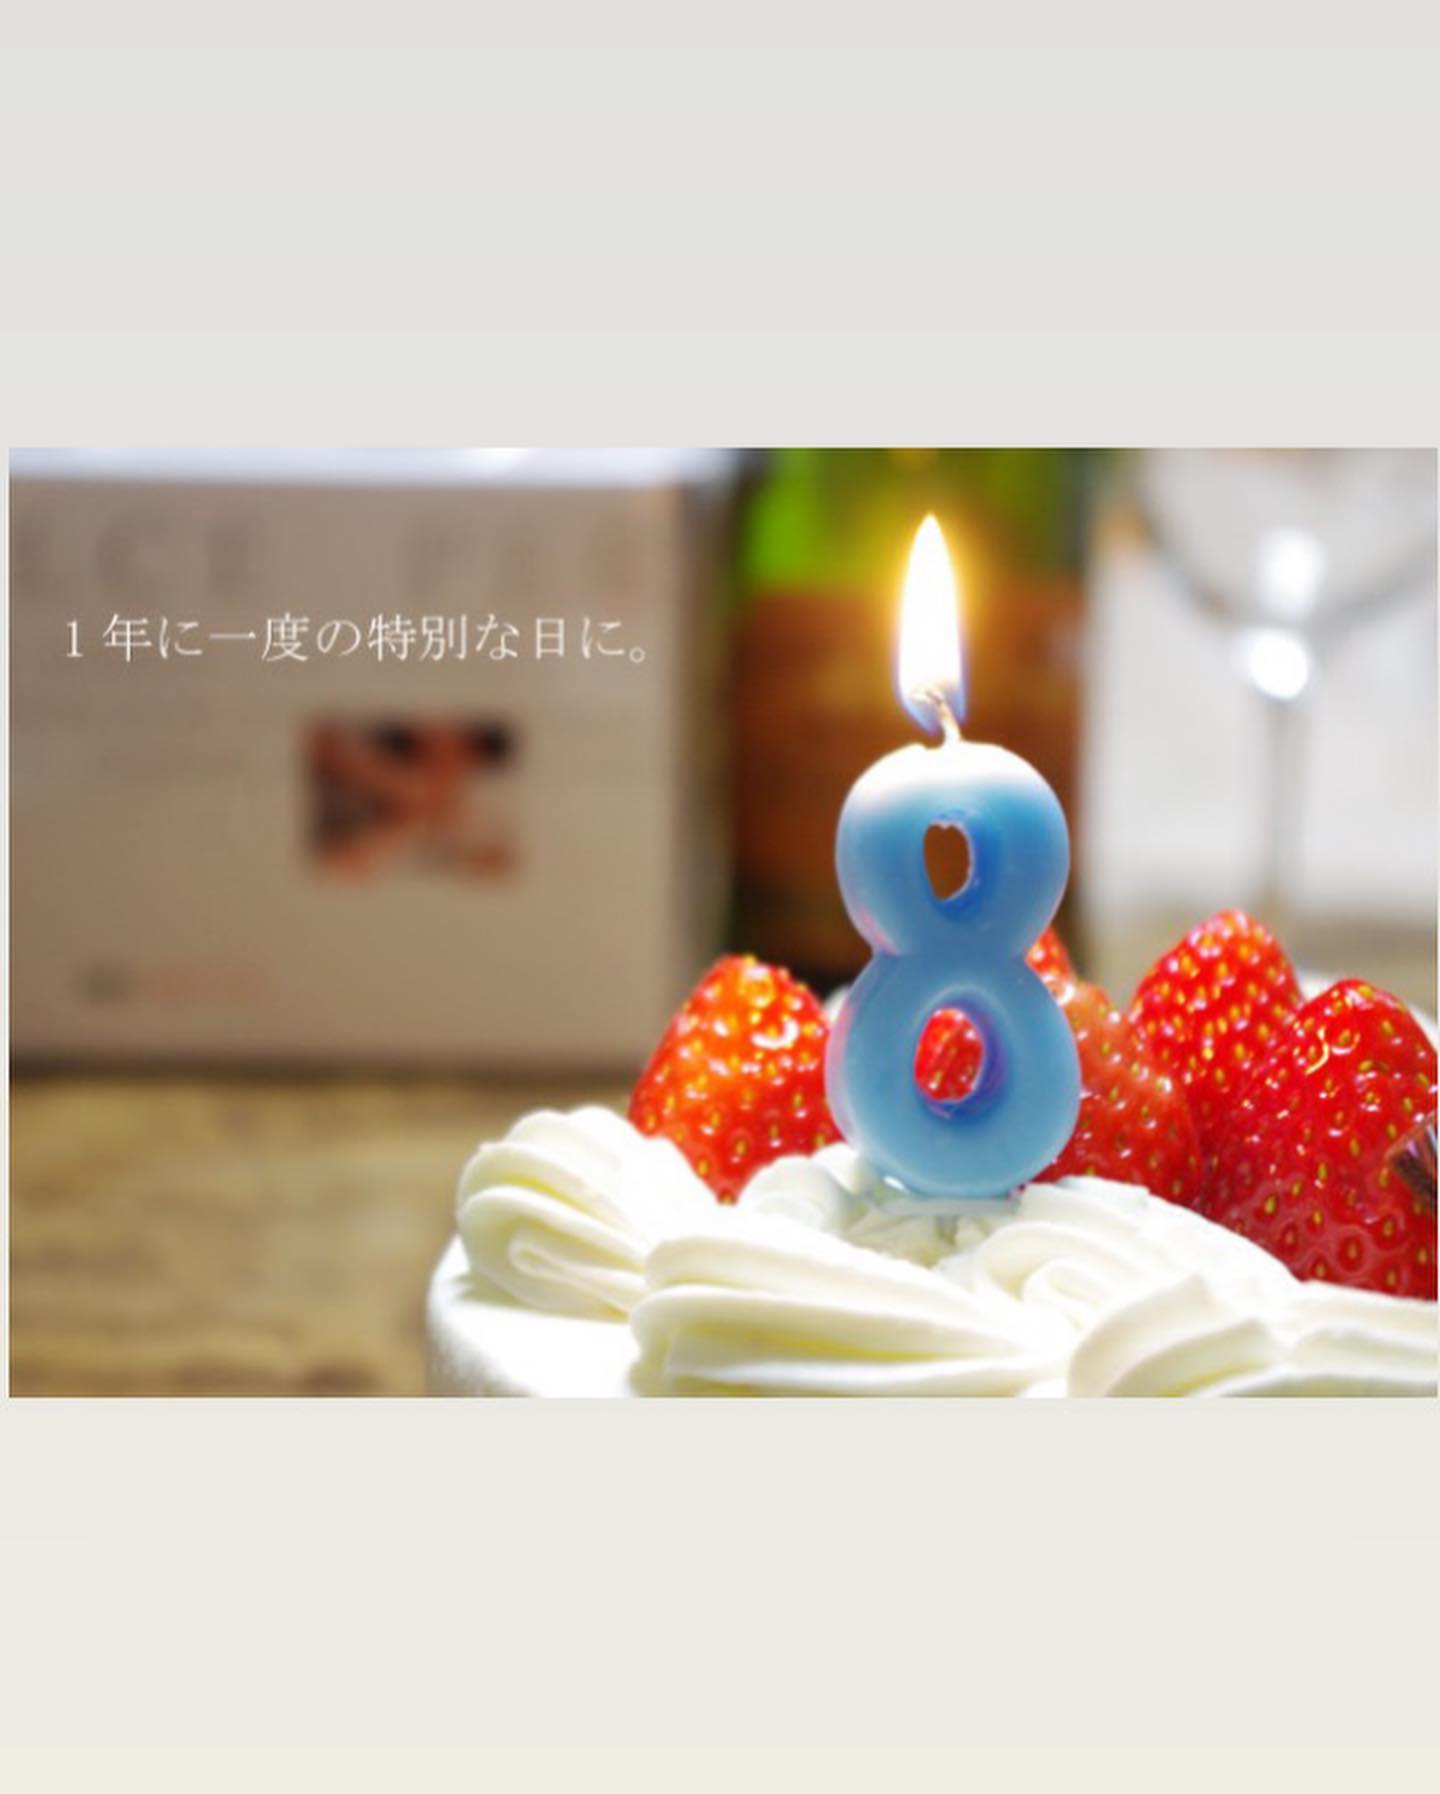 〜cake expressのキャンドル♪〜 from Instagram